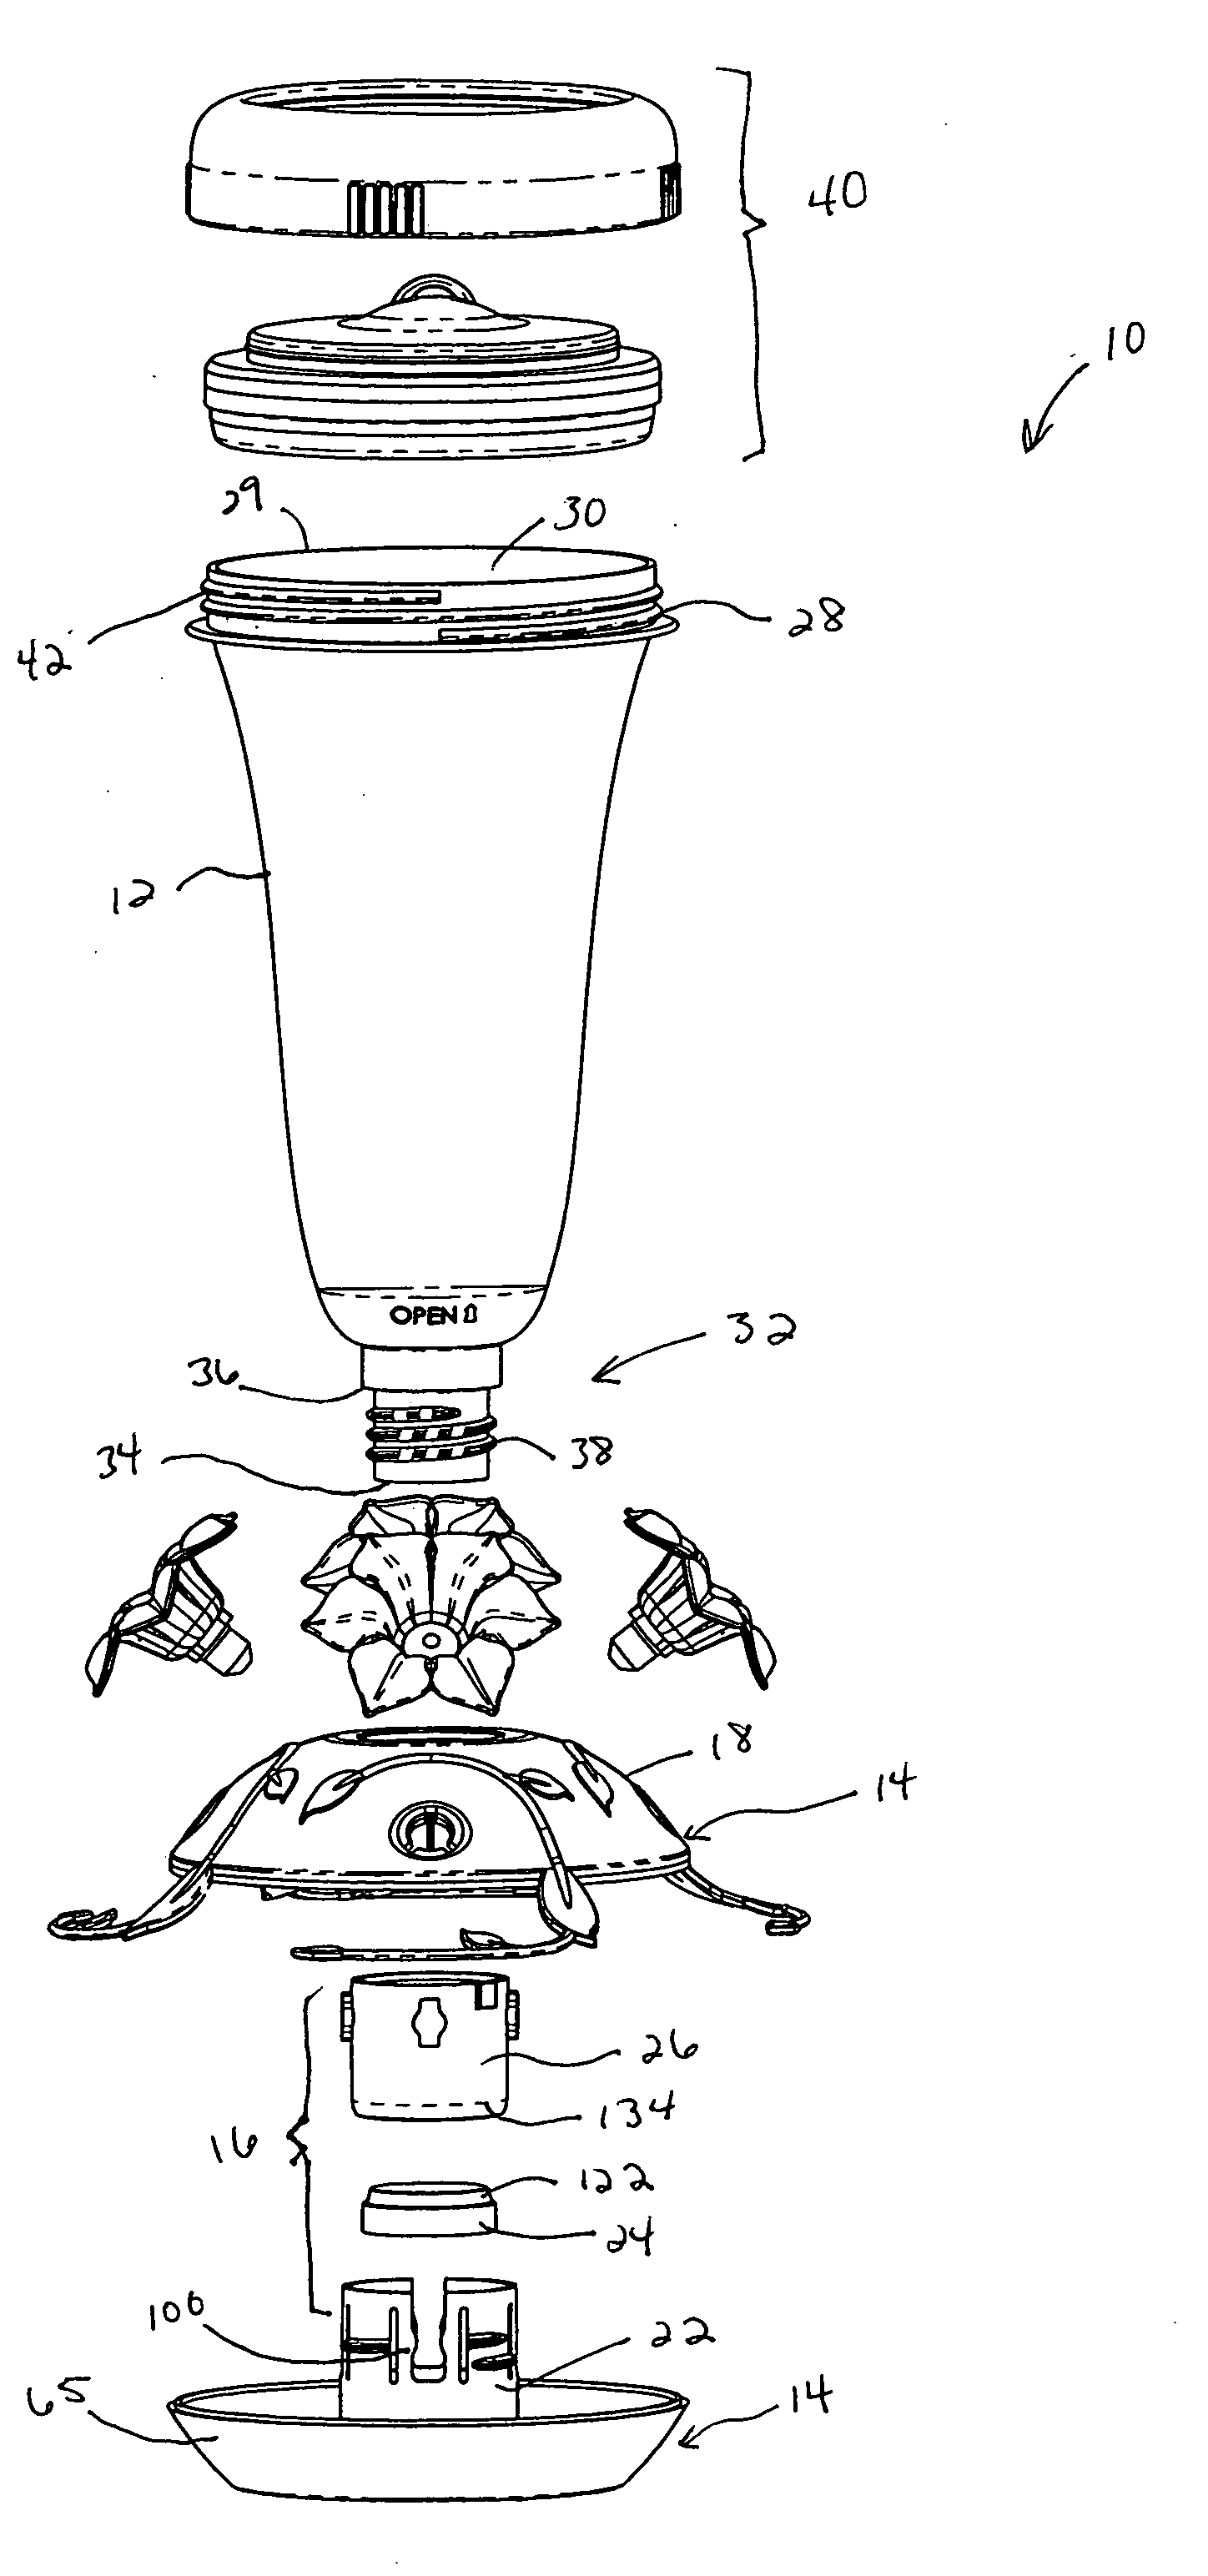 Top-fill hummingbird feeder with a cork-type top sealing member